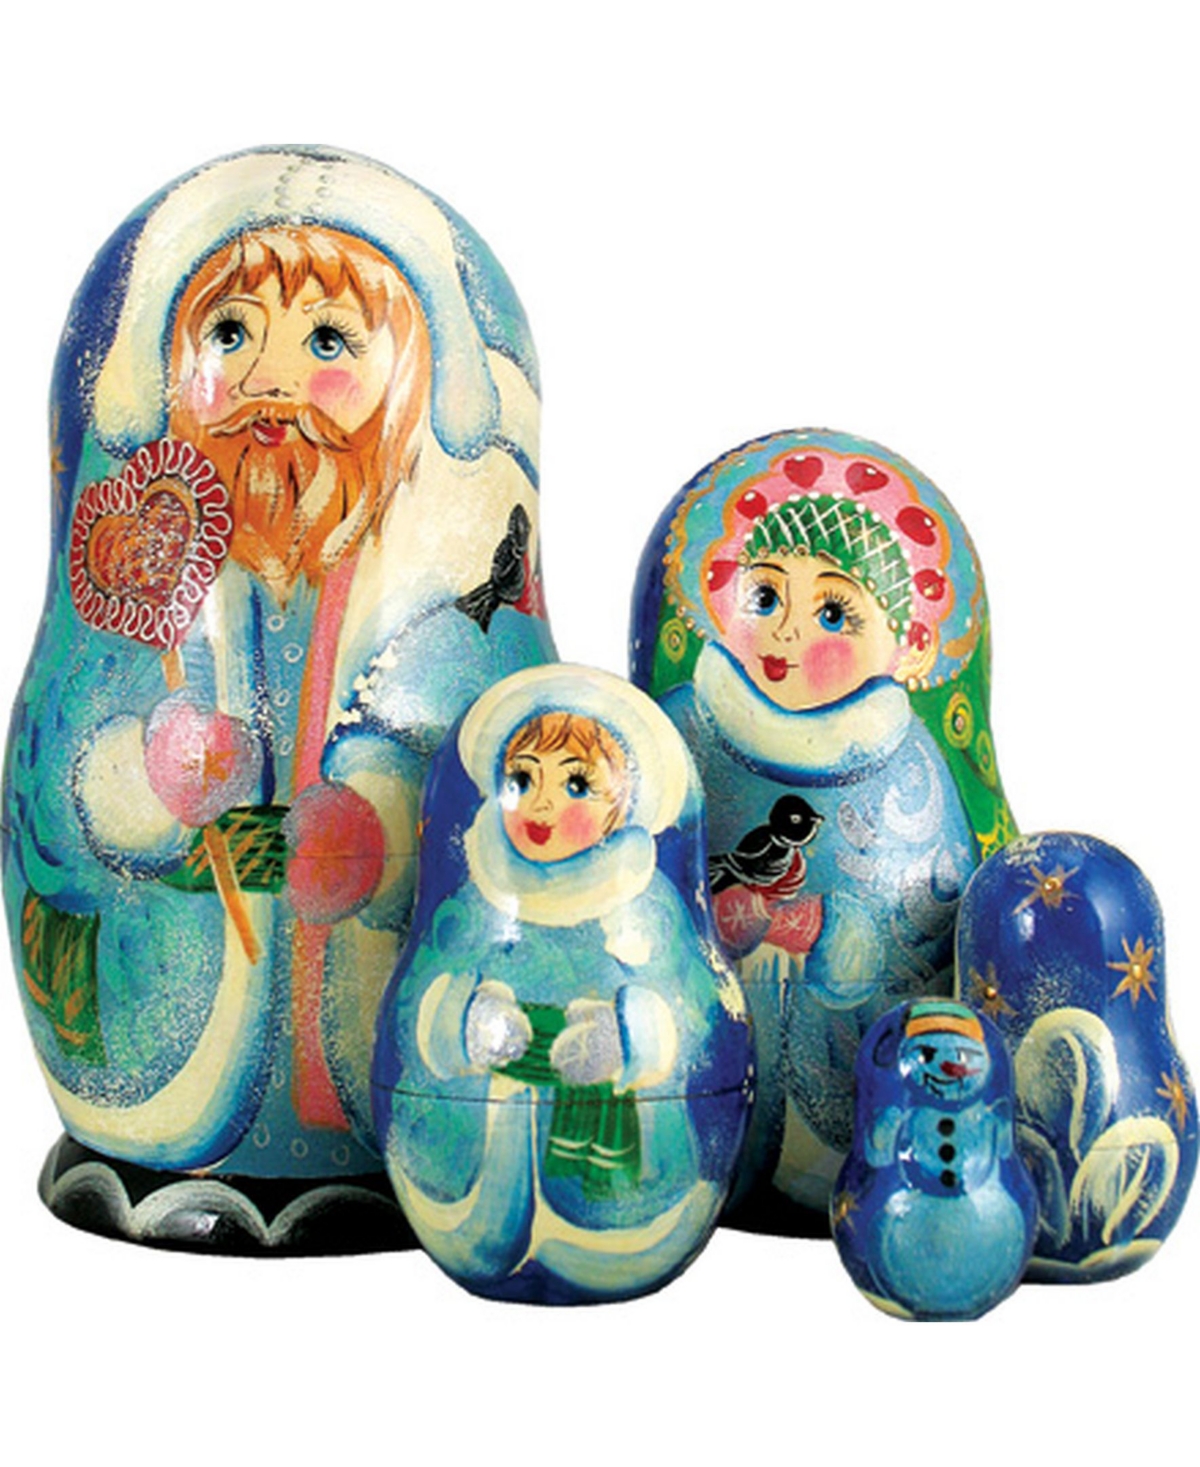 5-Piece Santa Candicane Russian Matryoshka Nested Doll Set - Multi